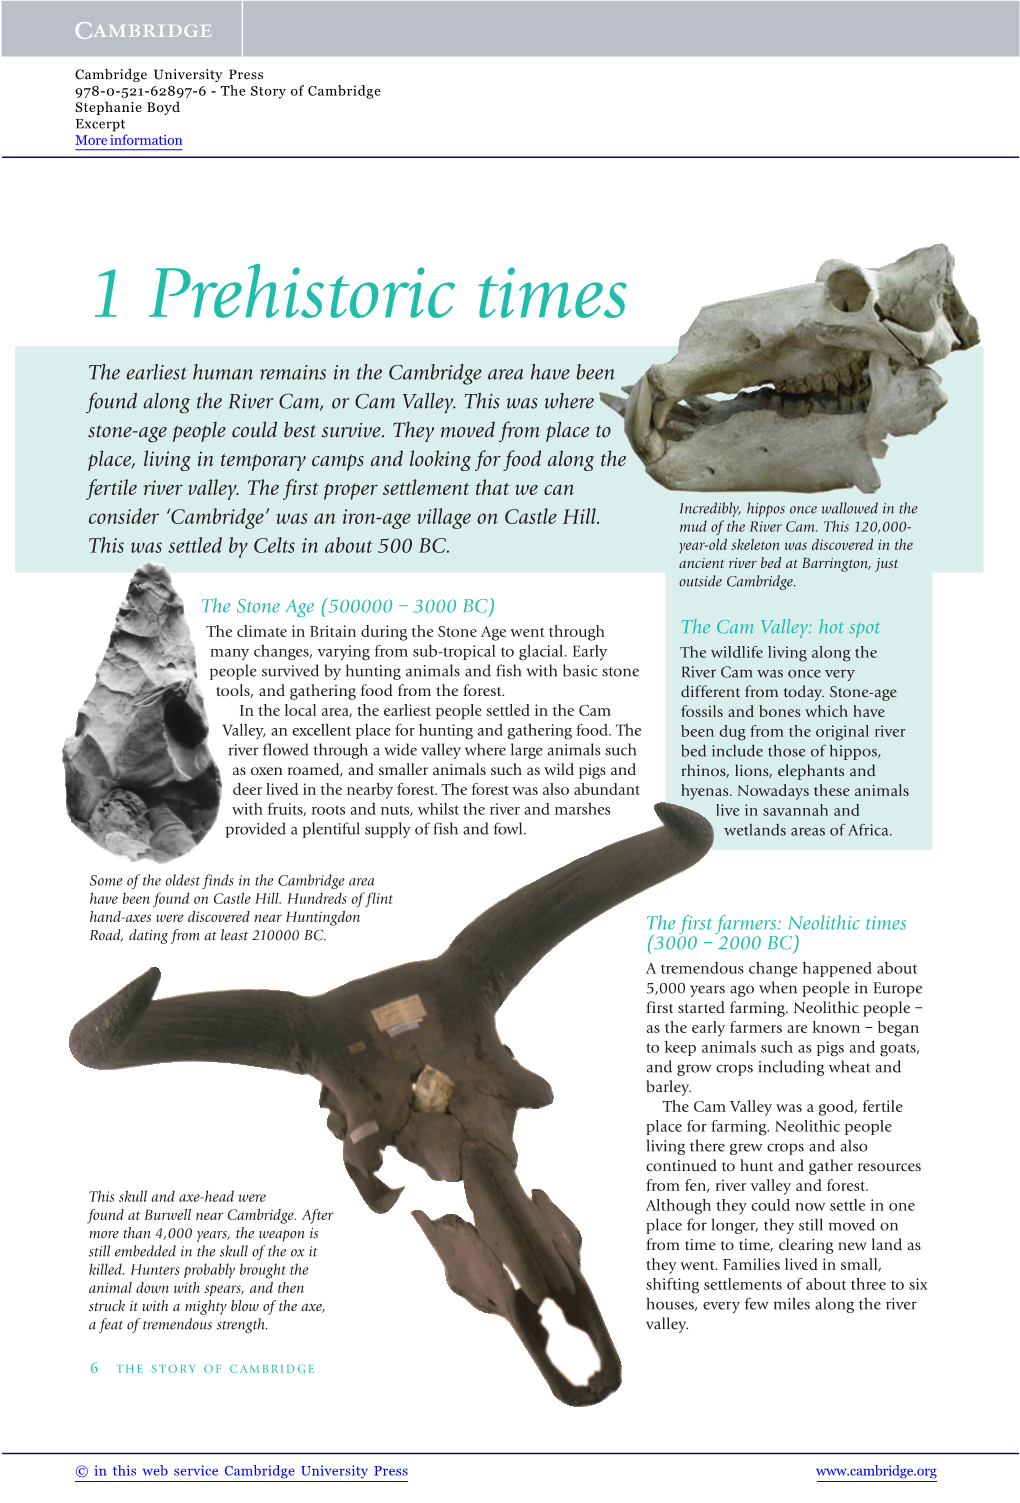 1 Prehistoric Times